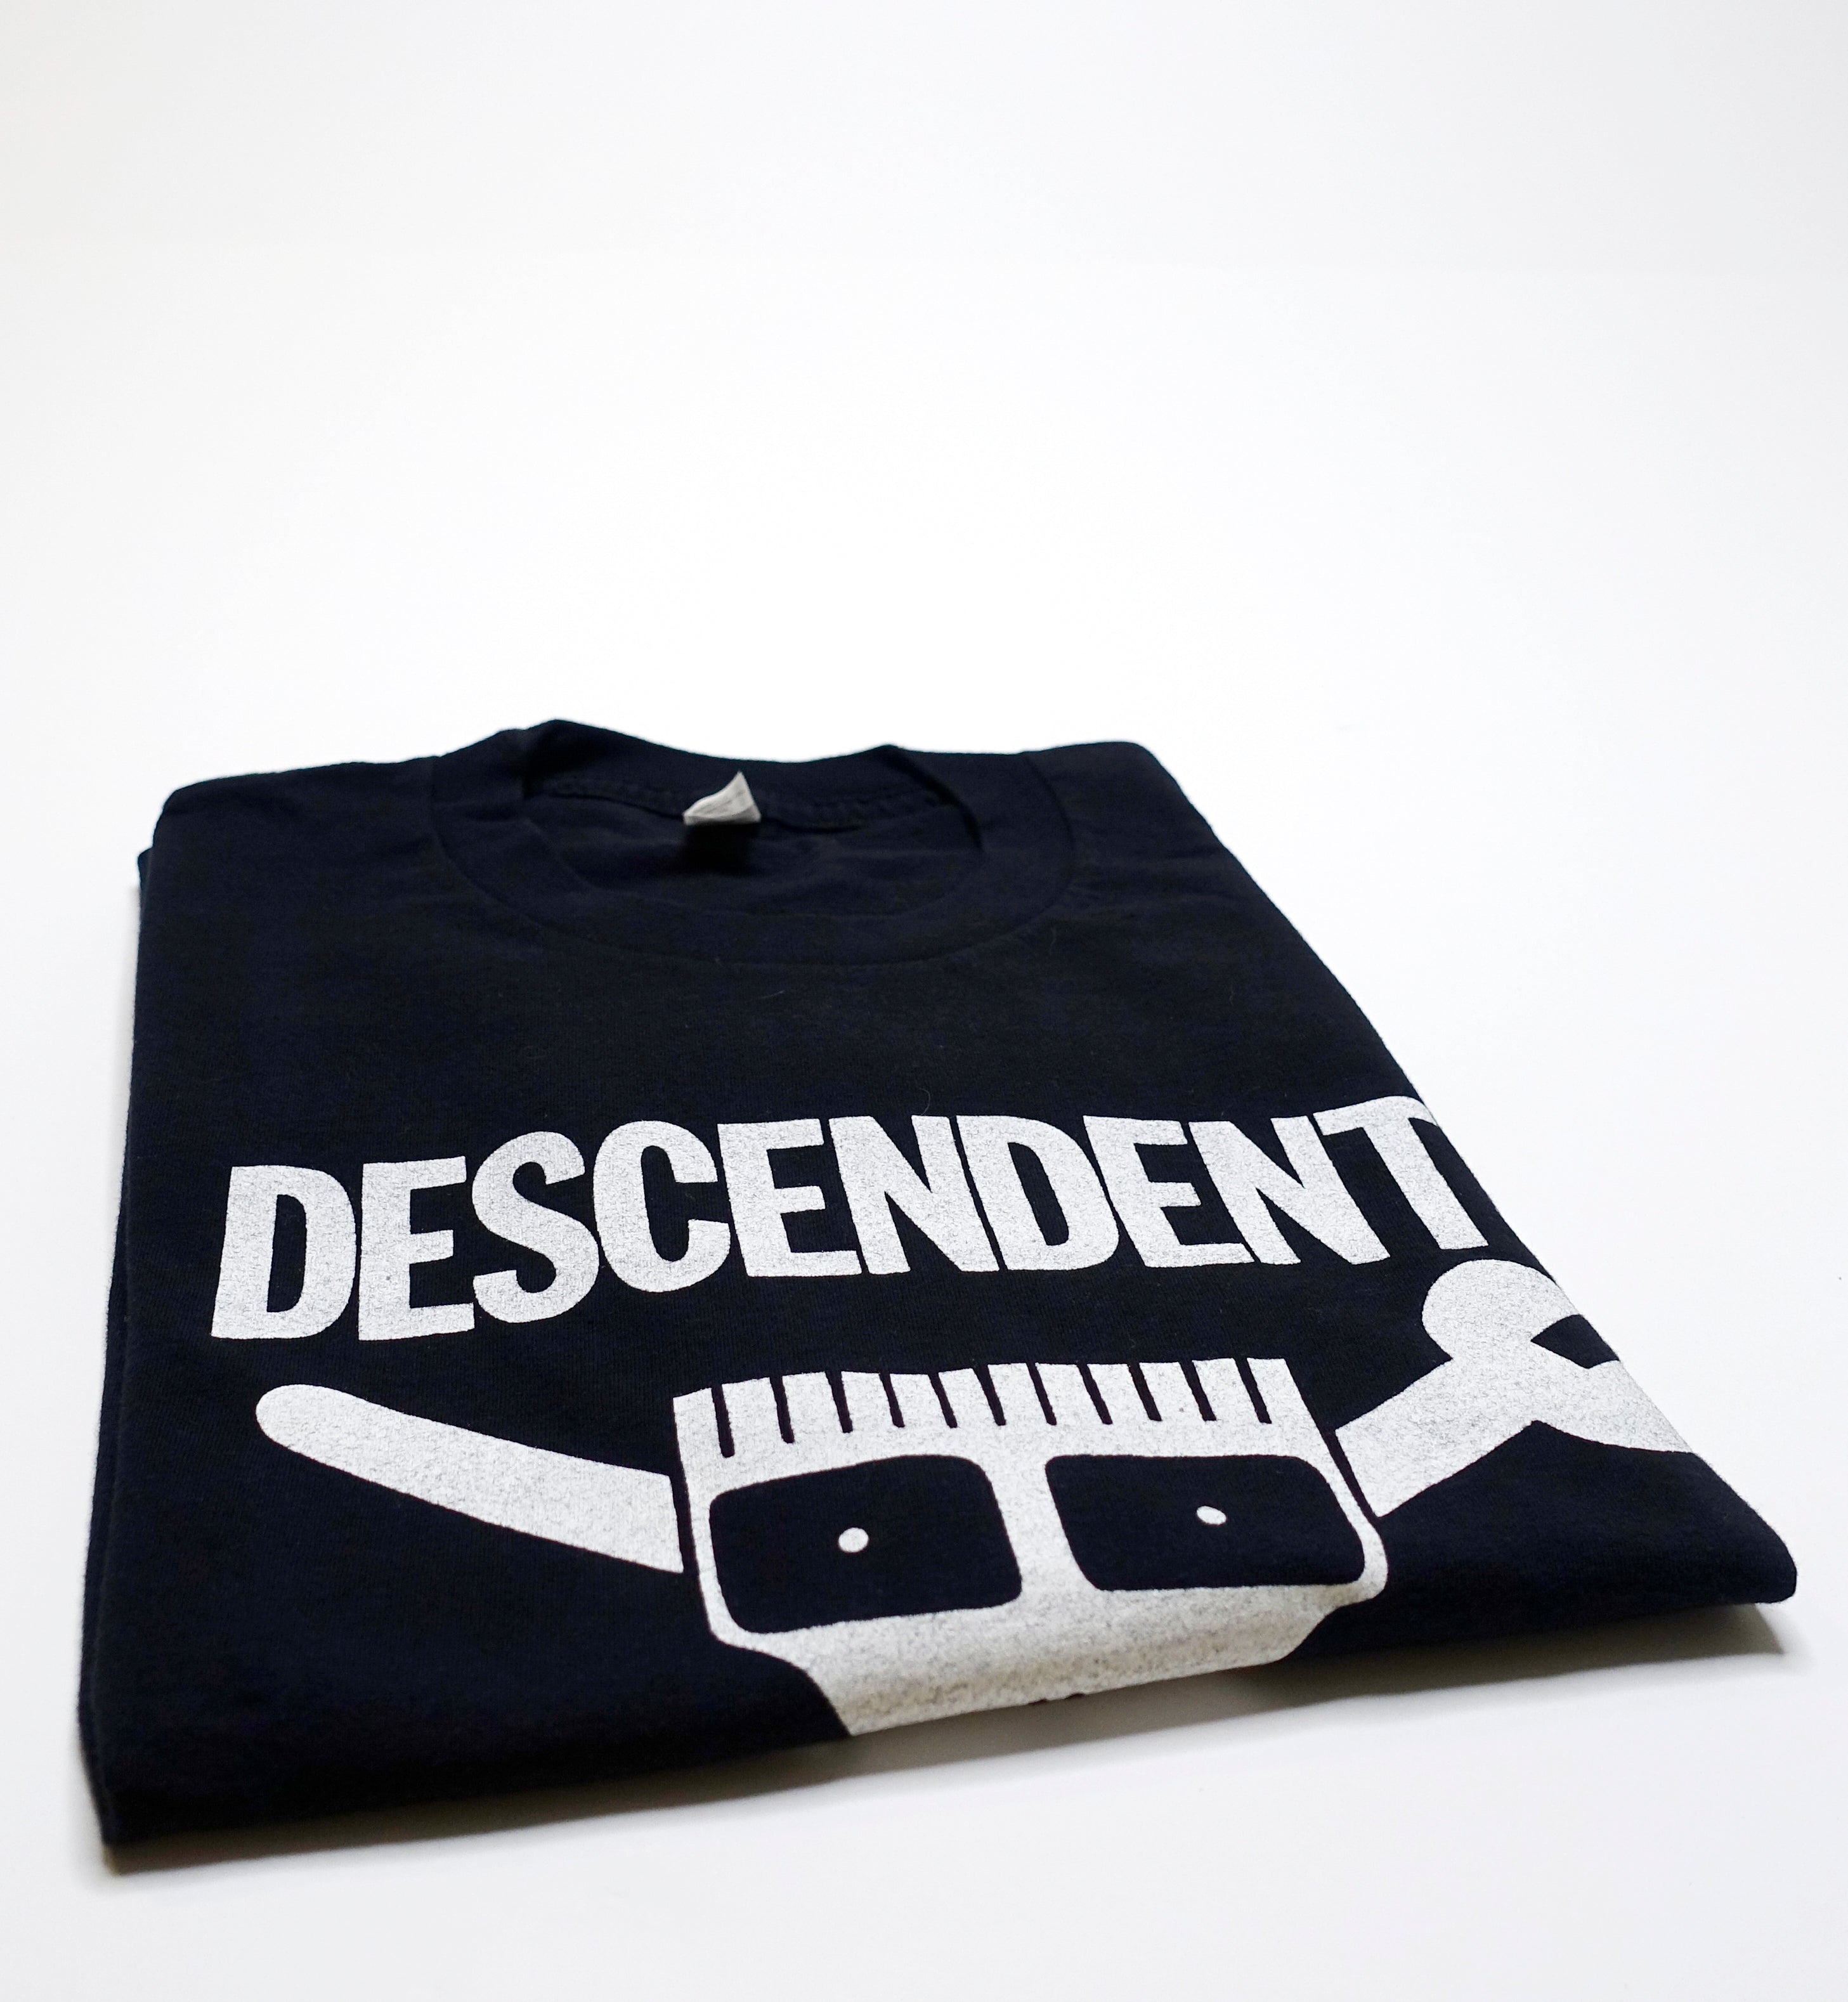 Descendents - Everything Sucks 1996 Tour Shirt (B/W Version) Size Large